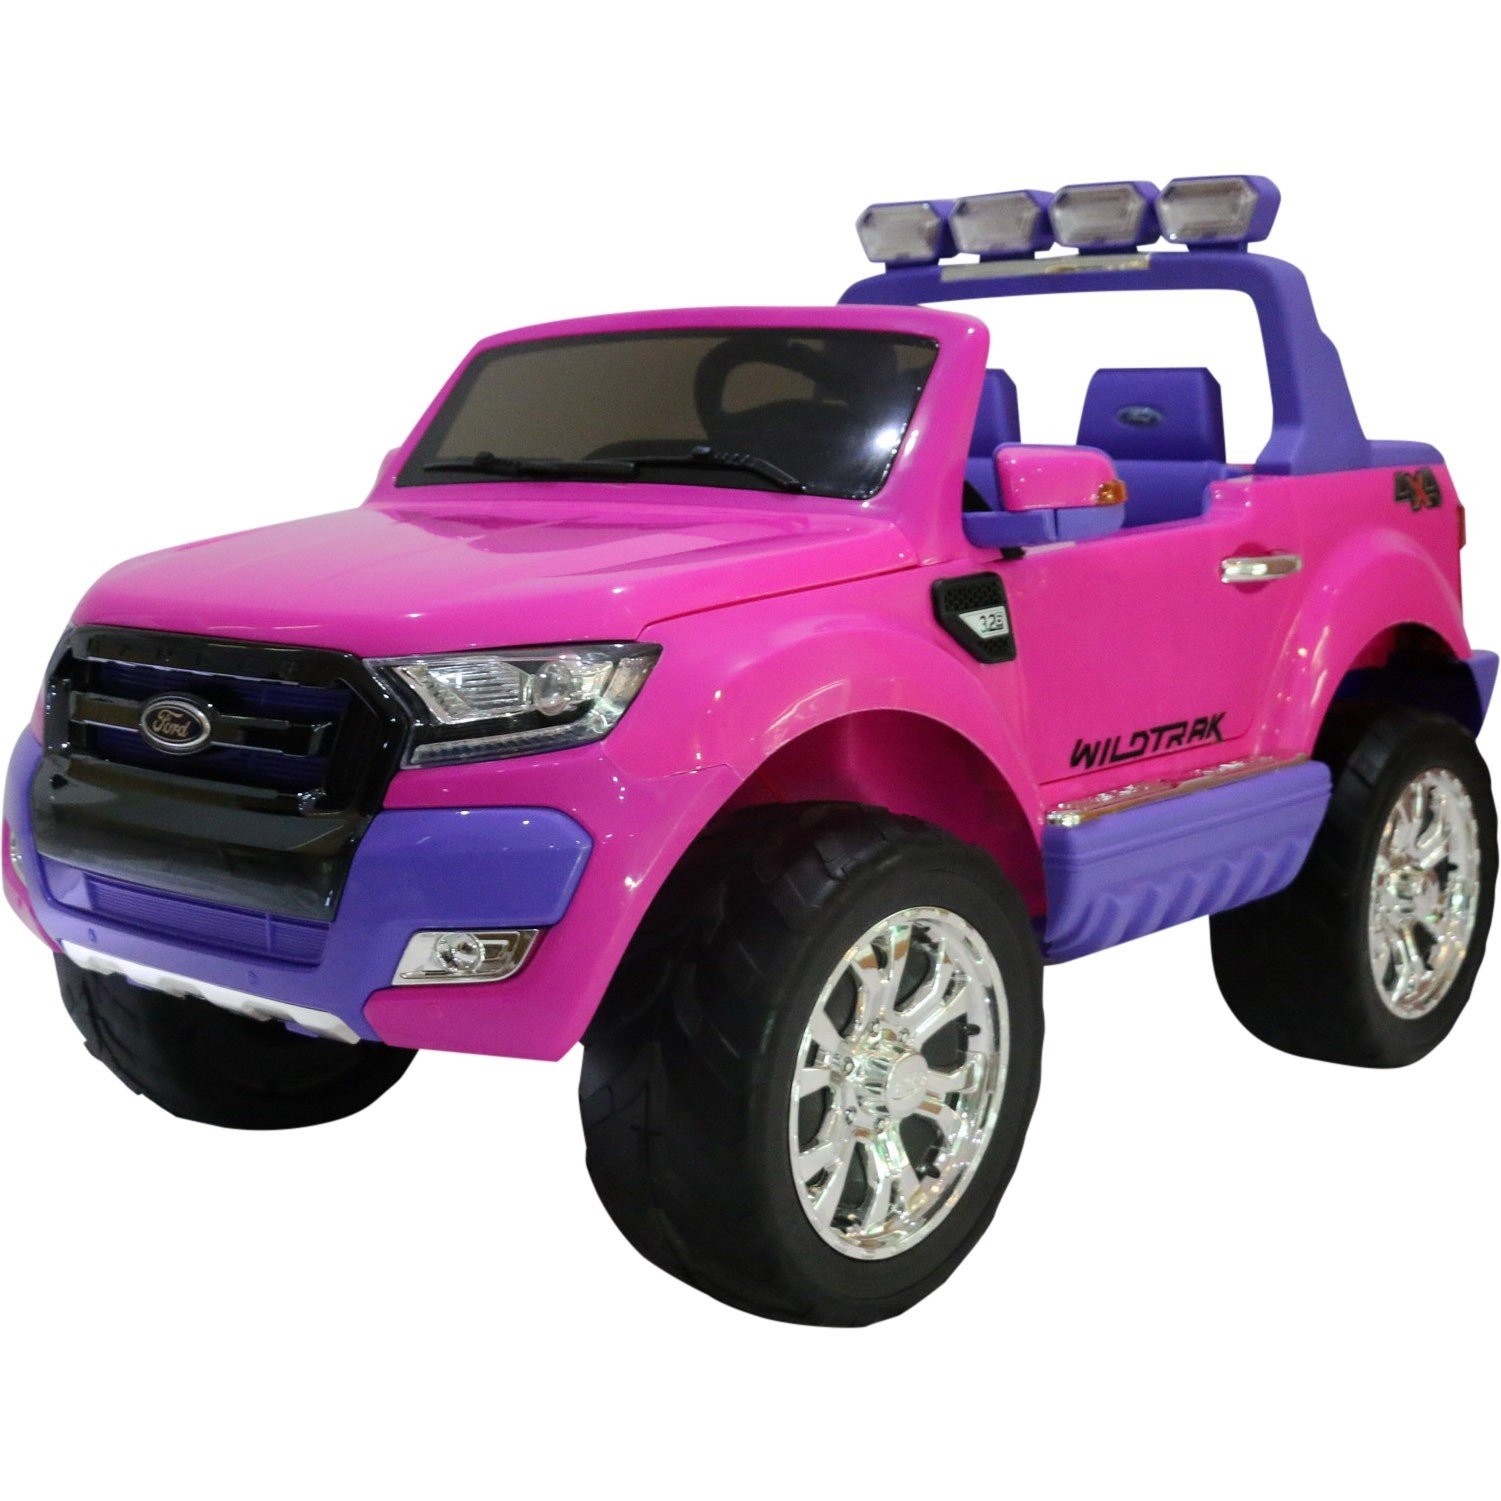 Ford Ranger Wildtrak 2018 Licensed 4WD 24V Battery Ride On Jeep – Pink